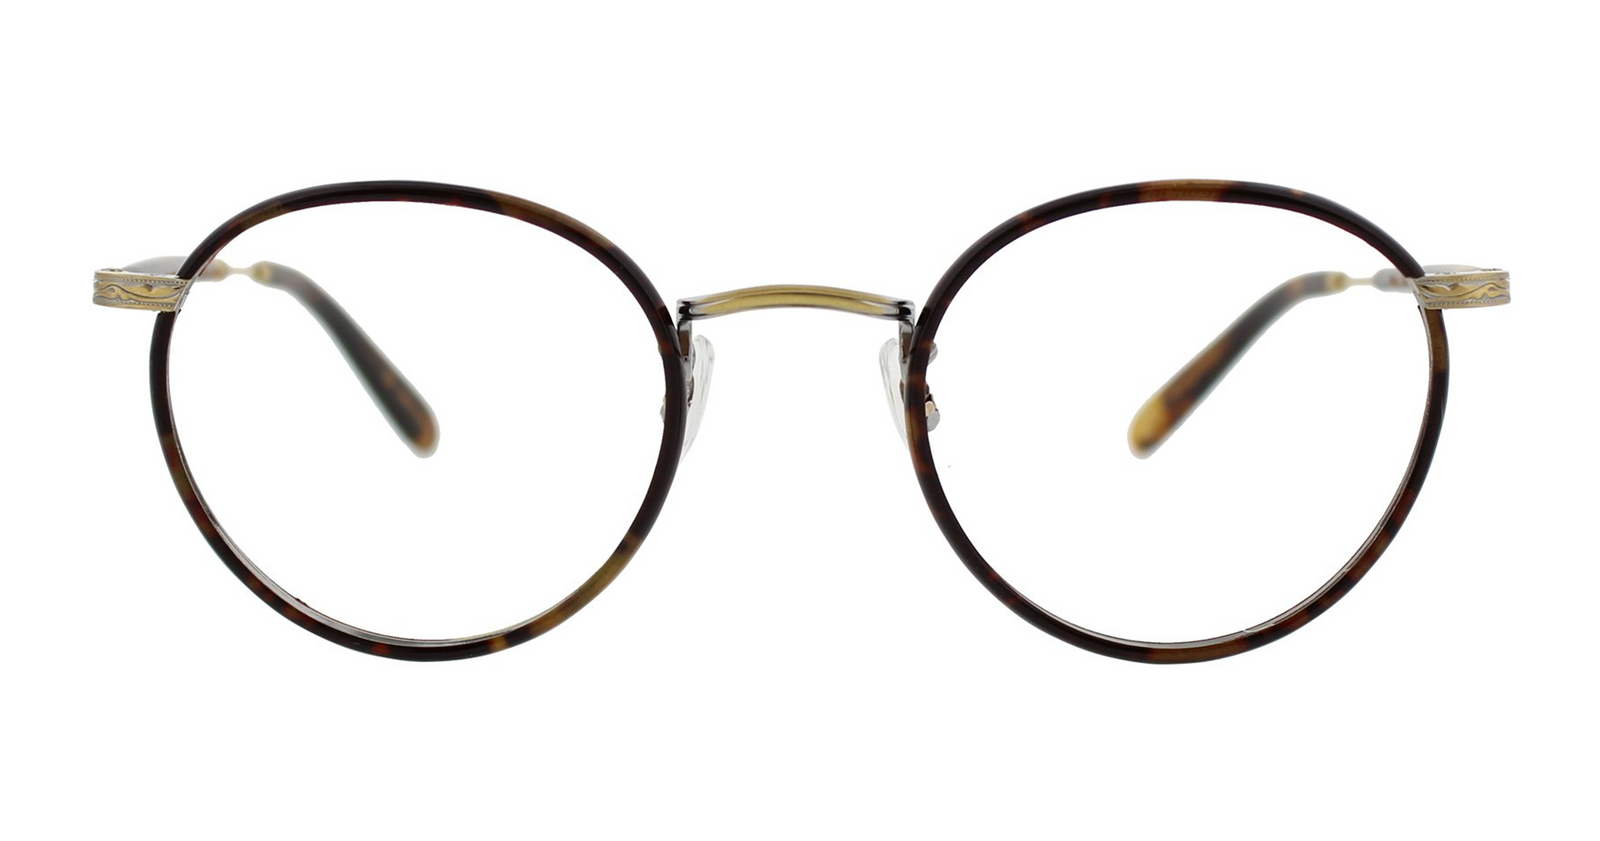 Hank Premium Series Vintage Acetate Round Glasses Frame - Bronze